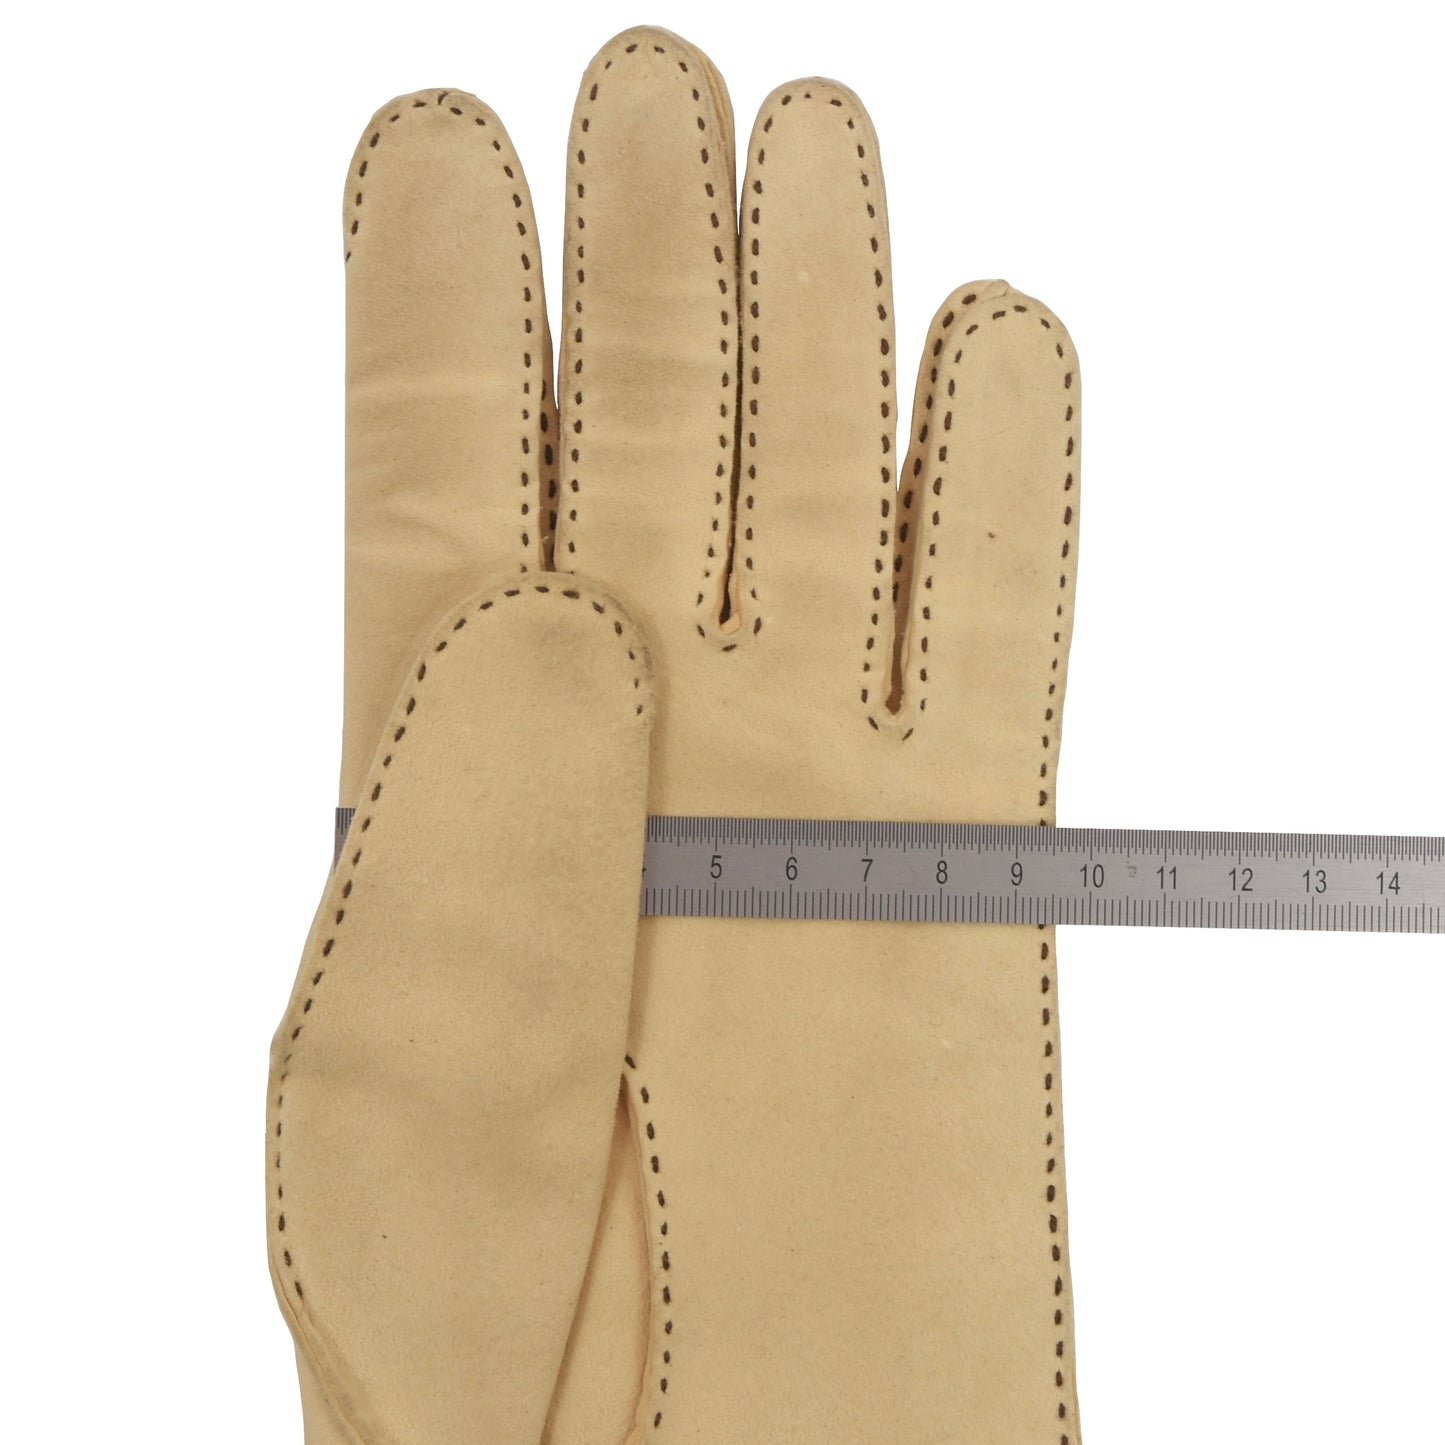 Doeskin Officer Leather Gloves Unlined - Natural/Butter